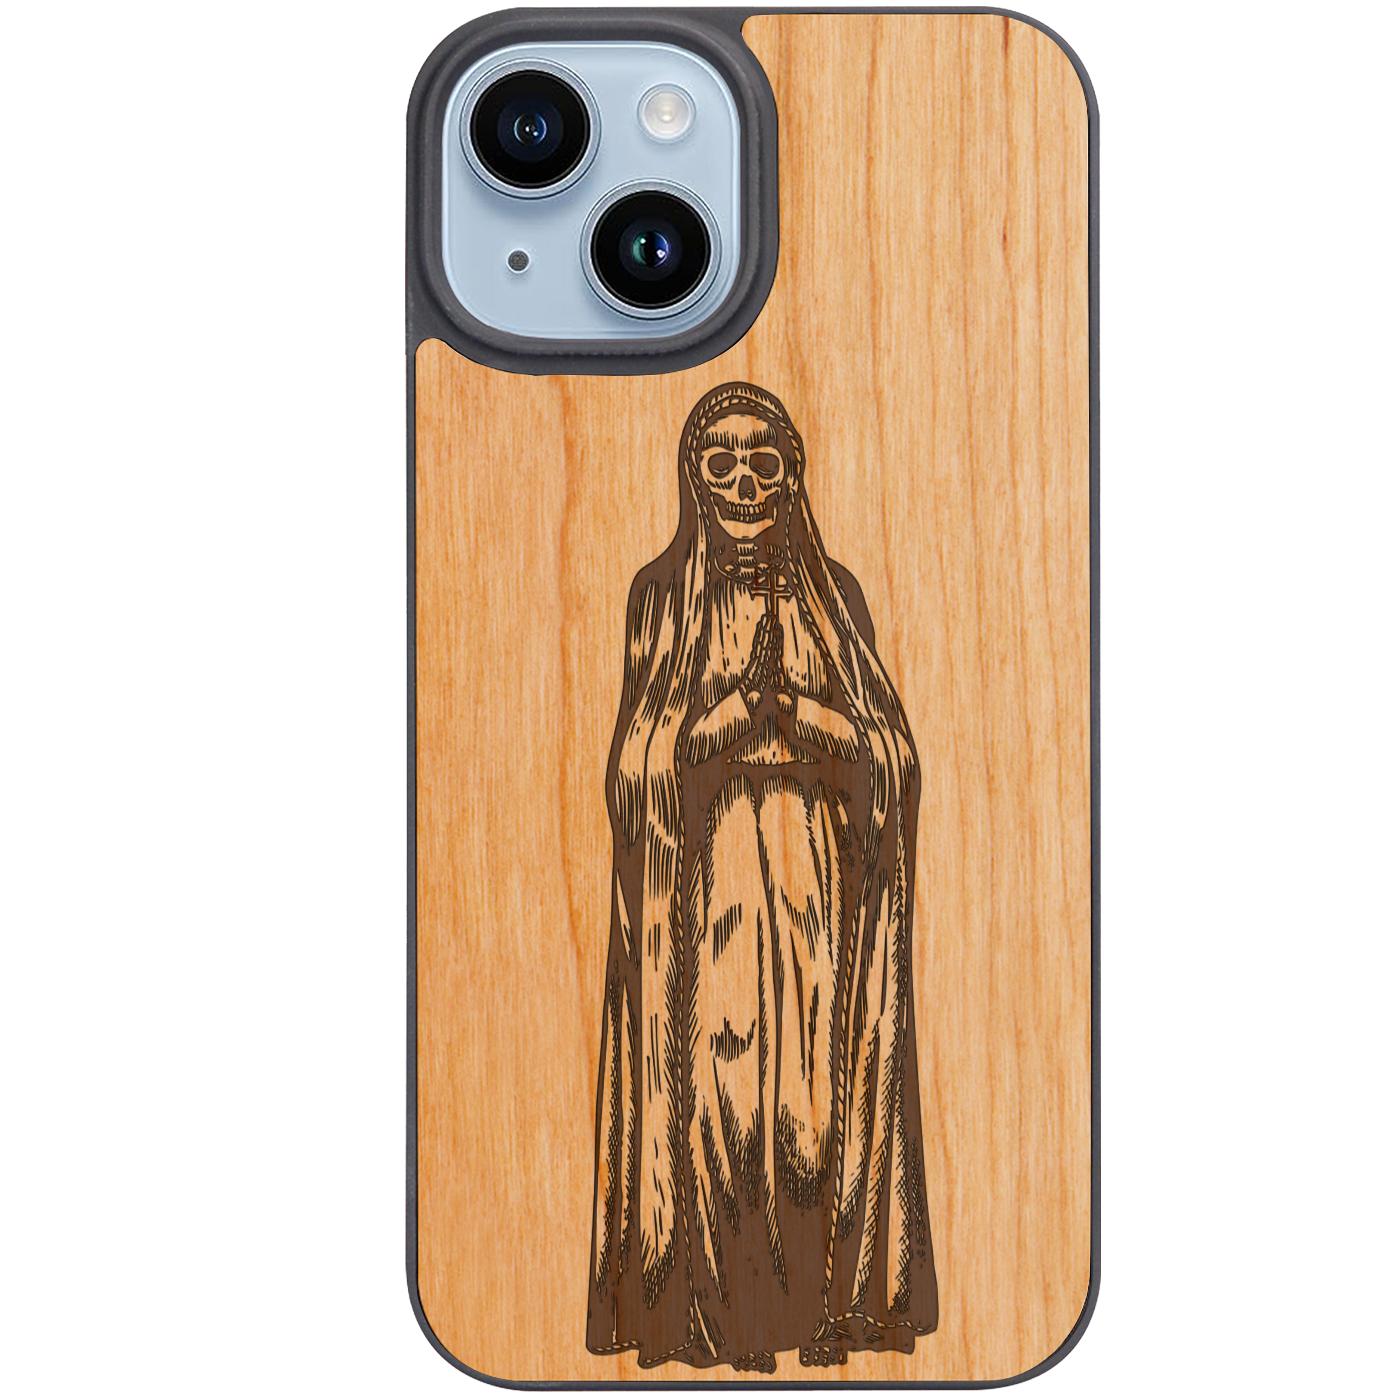 La Santa Muerte 2 - Engraved Phone Case